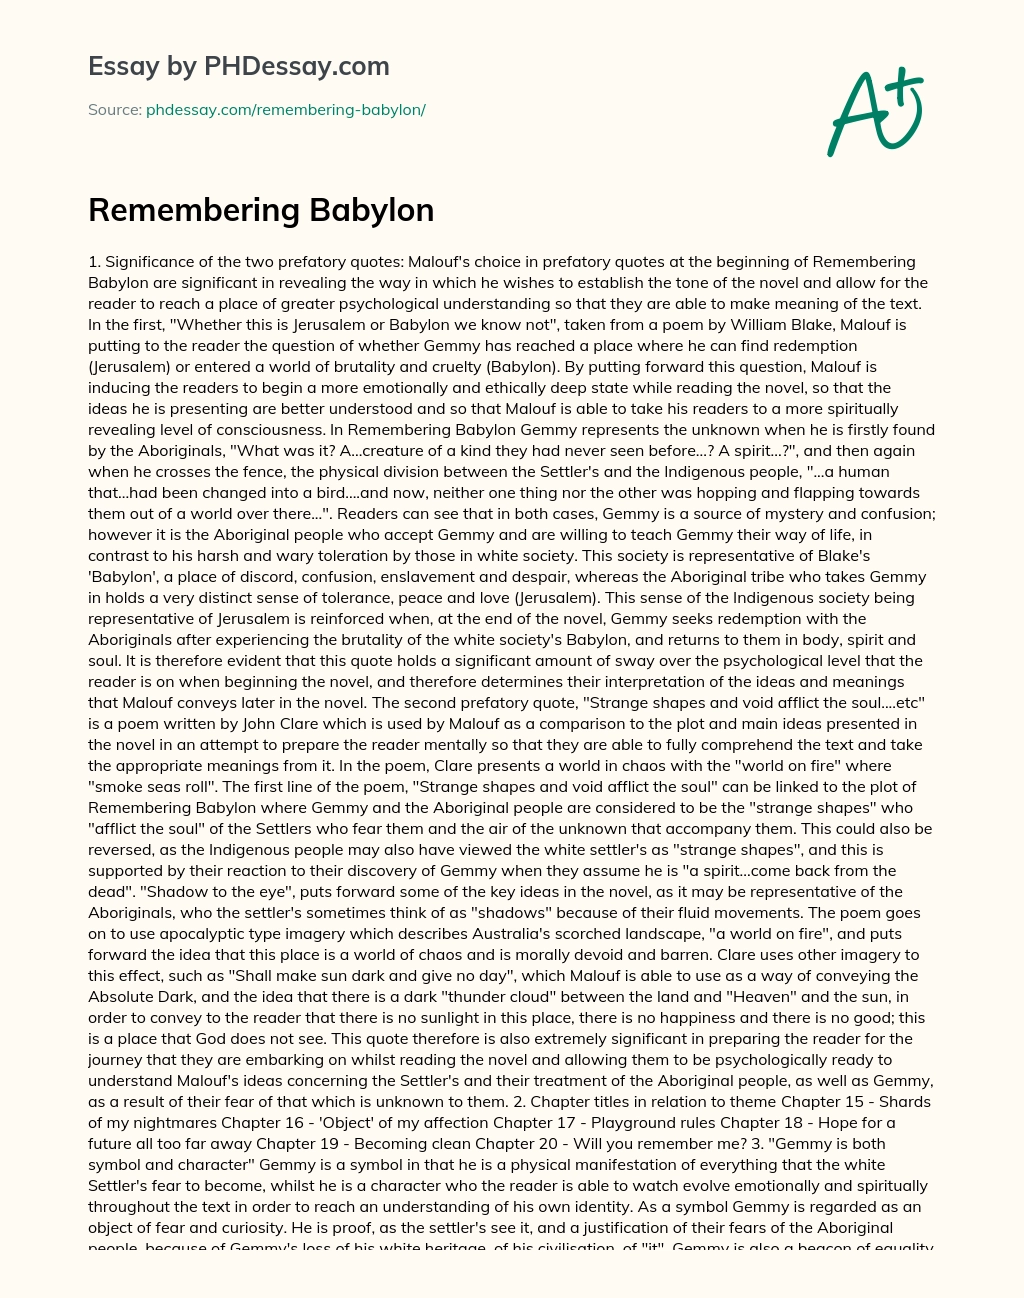 Remembering Babylon essay